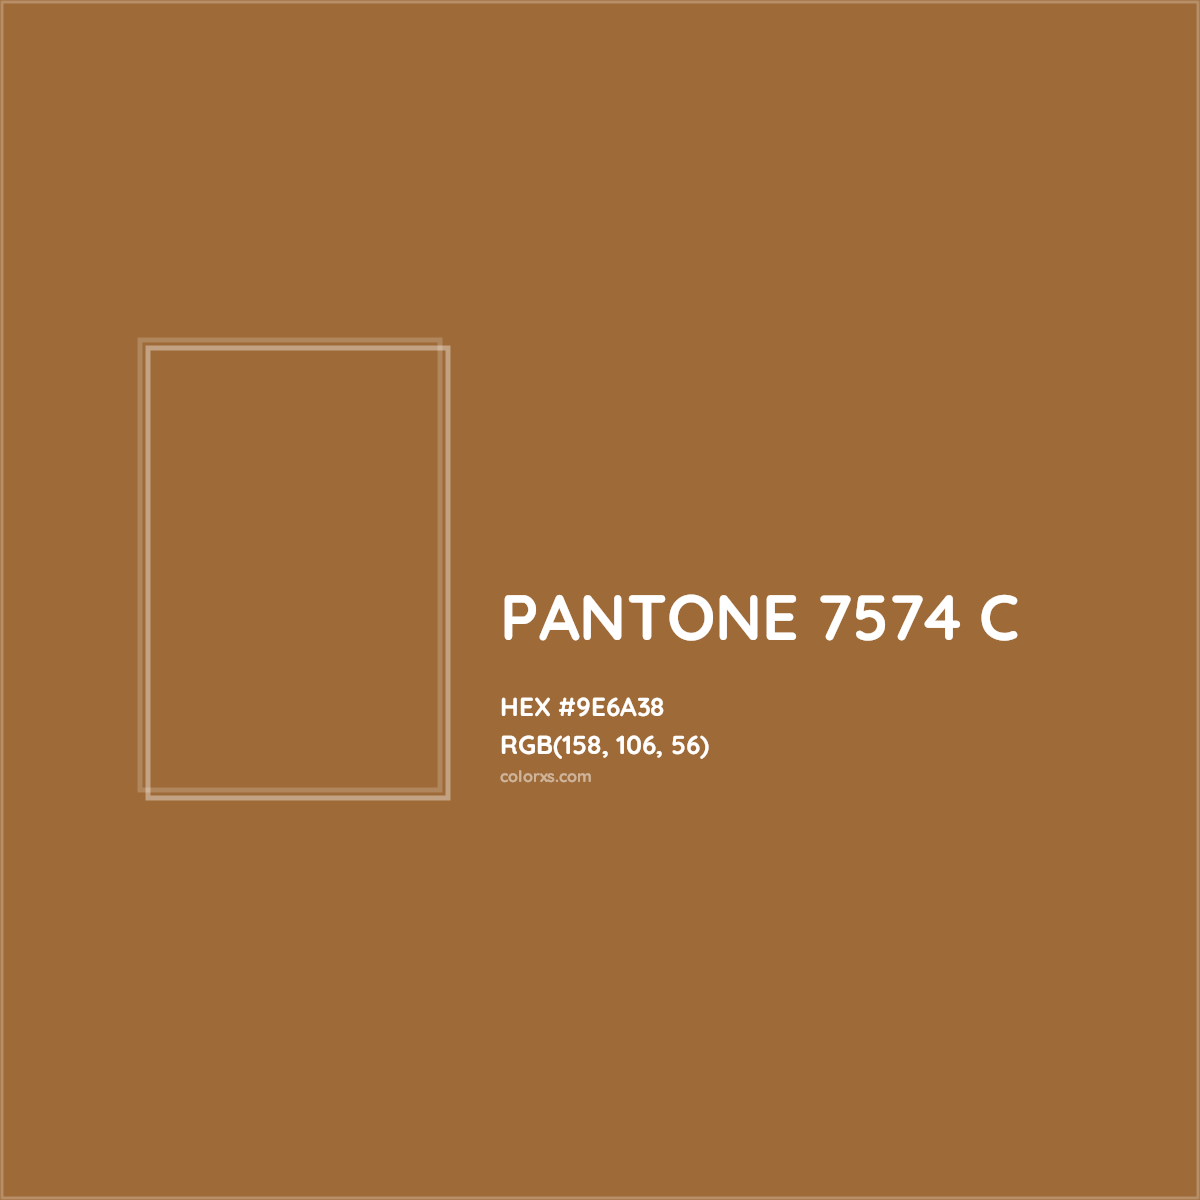 HEX #9E6A38 PANTONE 7574 C CMS Pantone PMS - Color Code